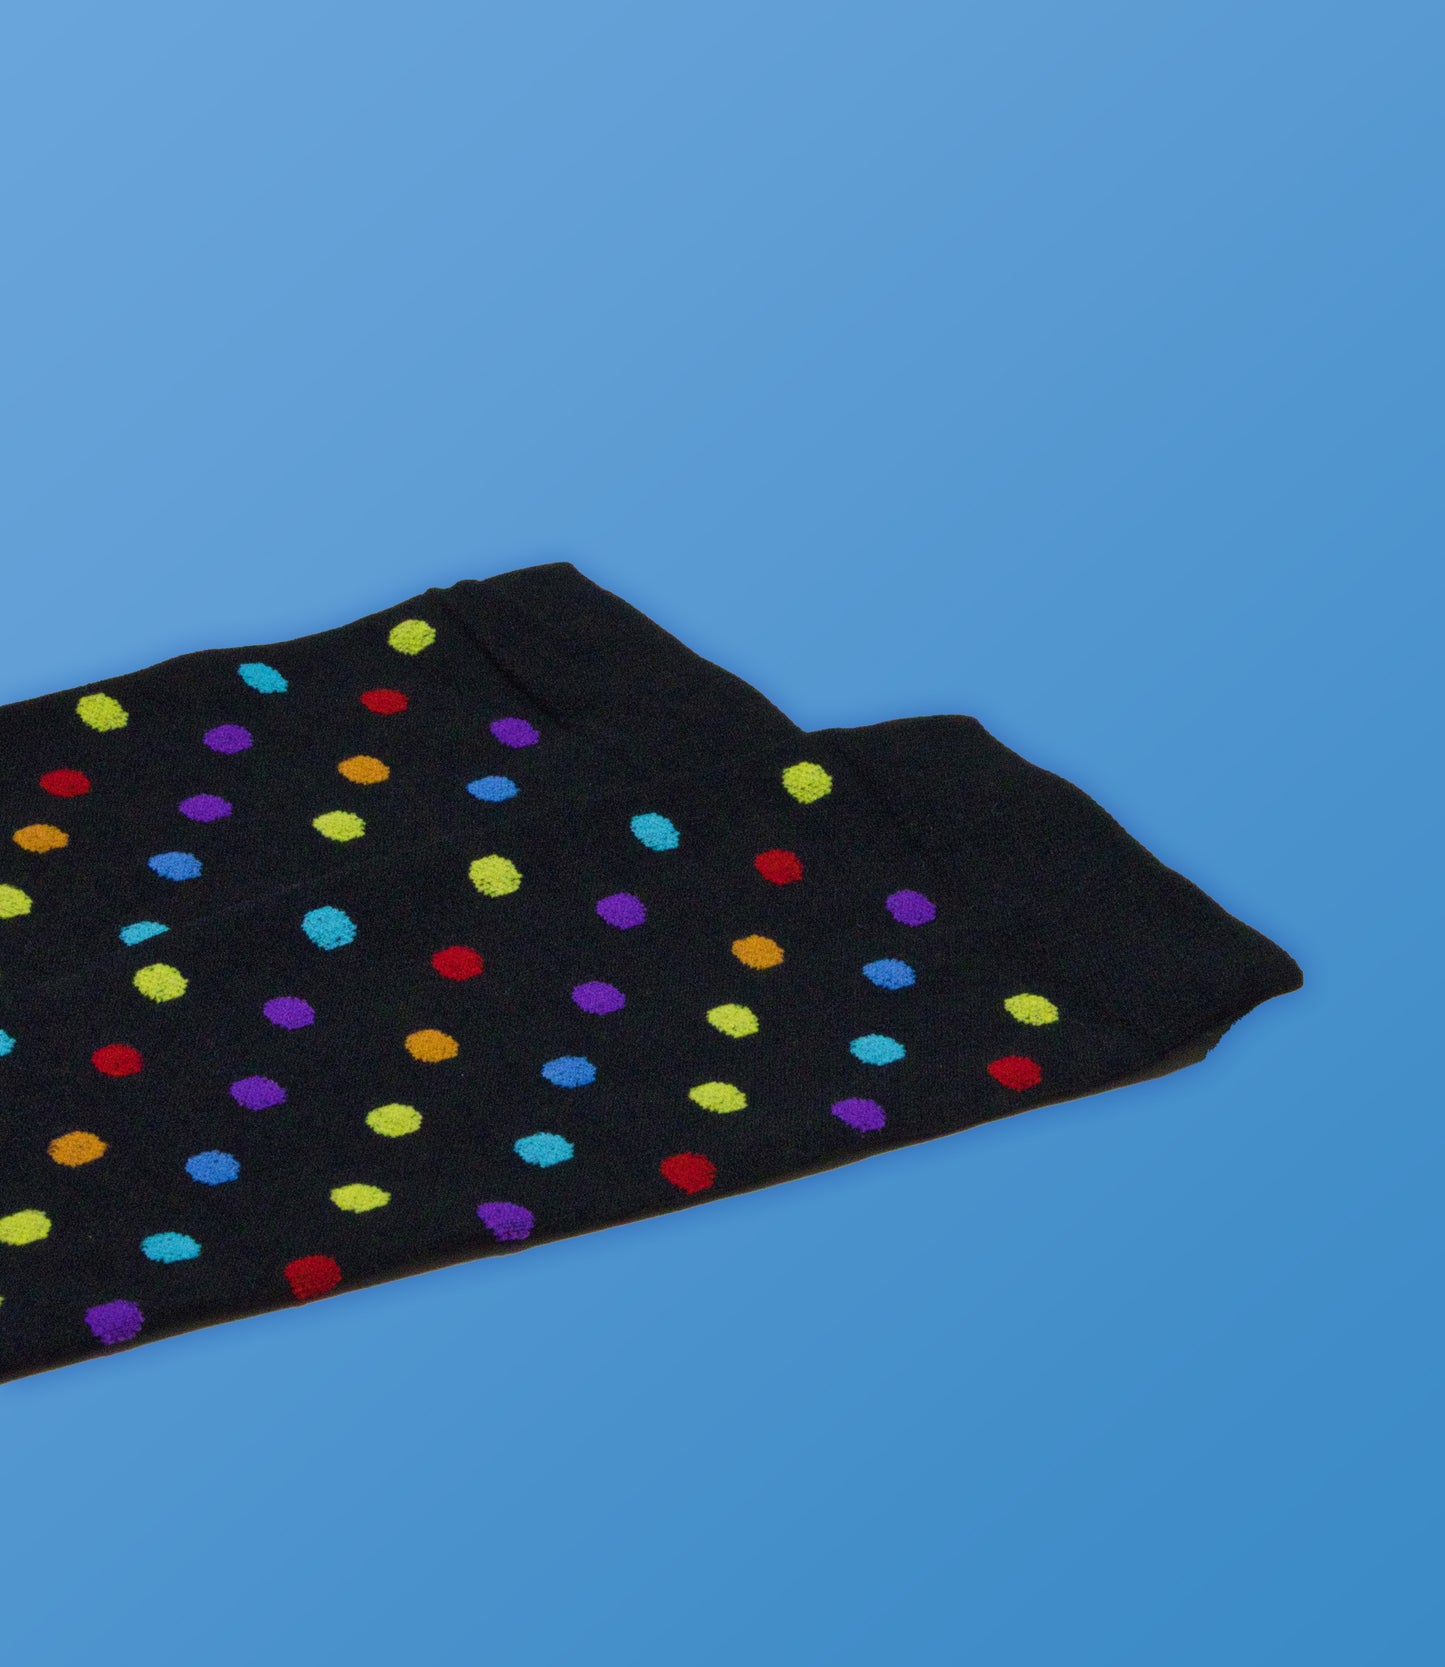 Multi Coloured Polka Dot Compression Socks